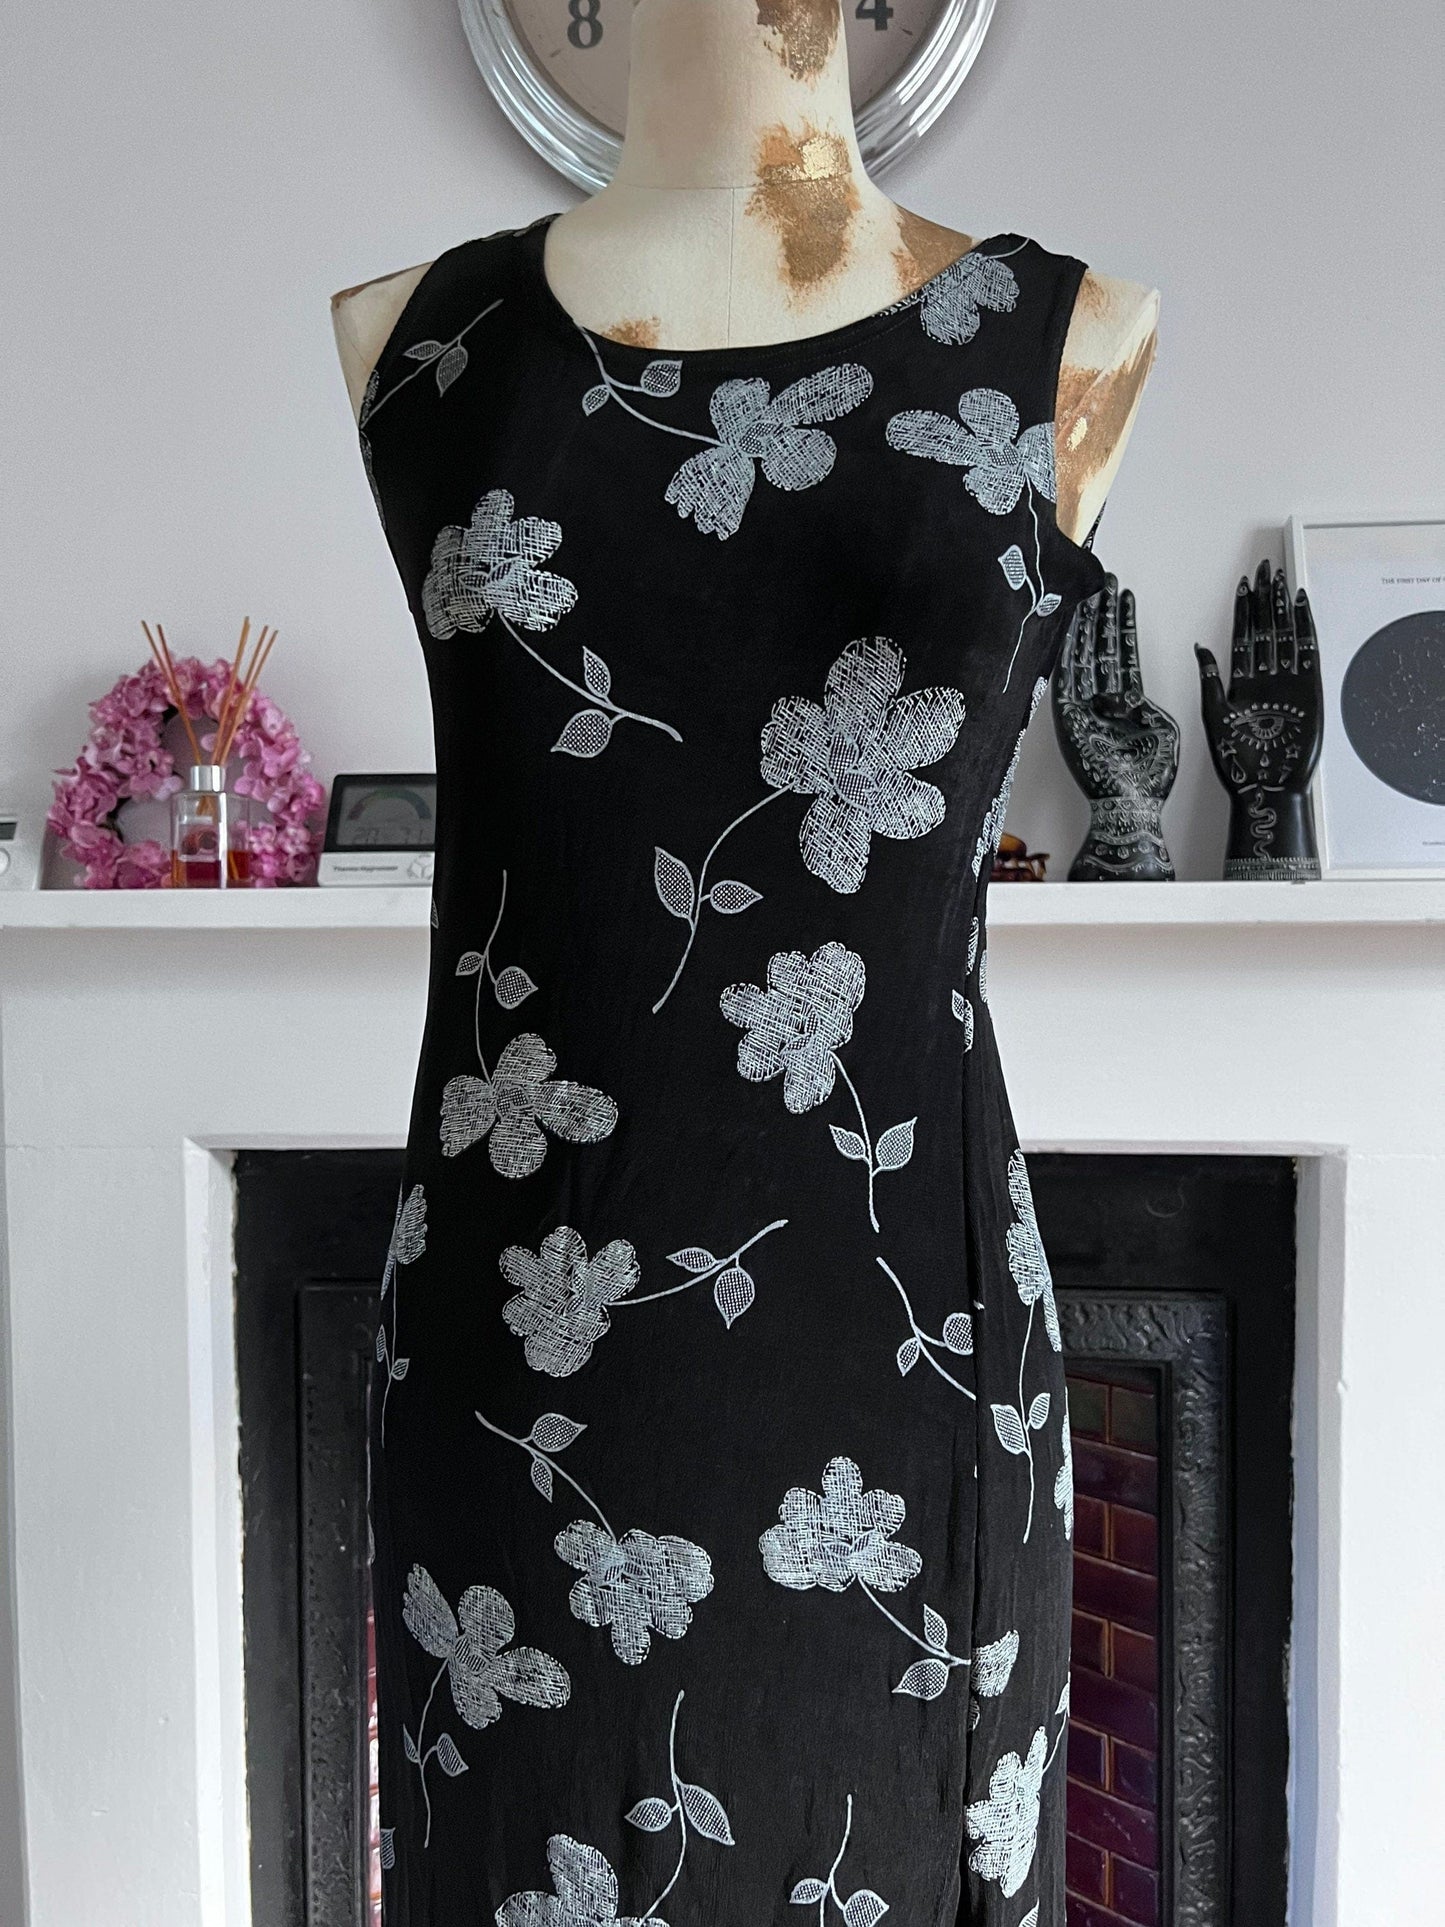 Vintage Black white Floral Maxi Dress - Size UK8/12 Stretch Lycra Body Con Black & White Dress with front split